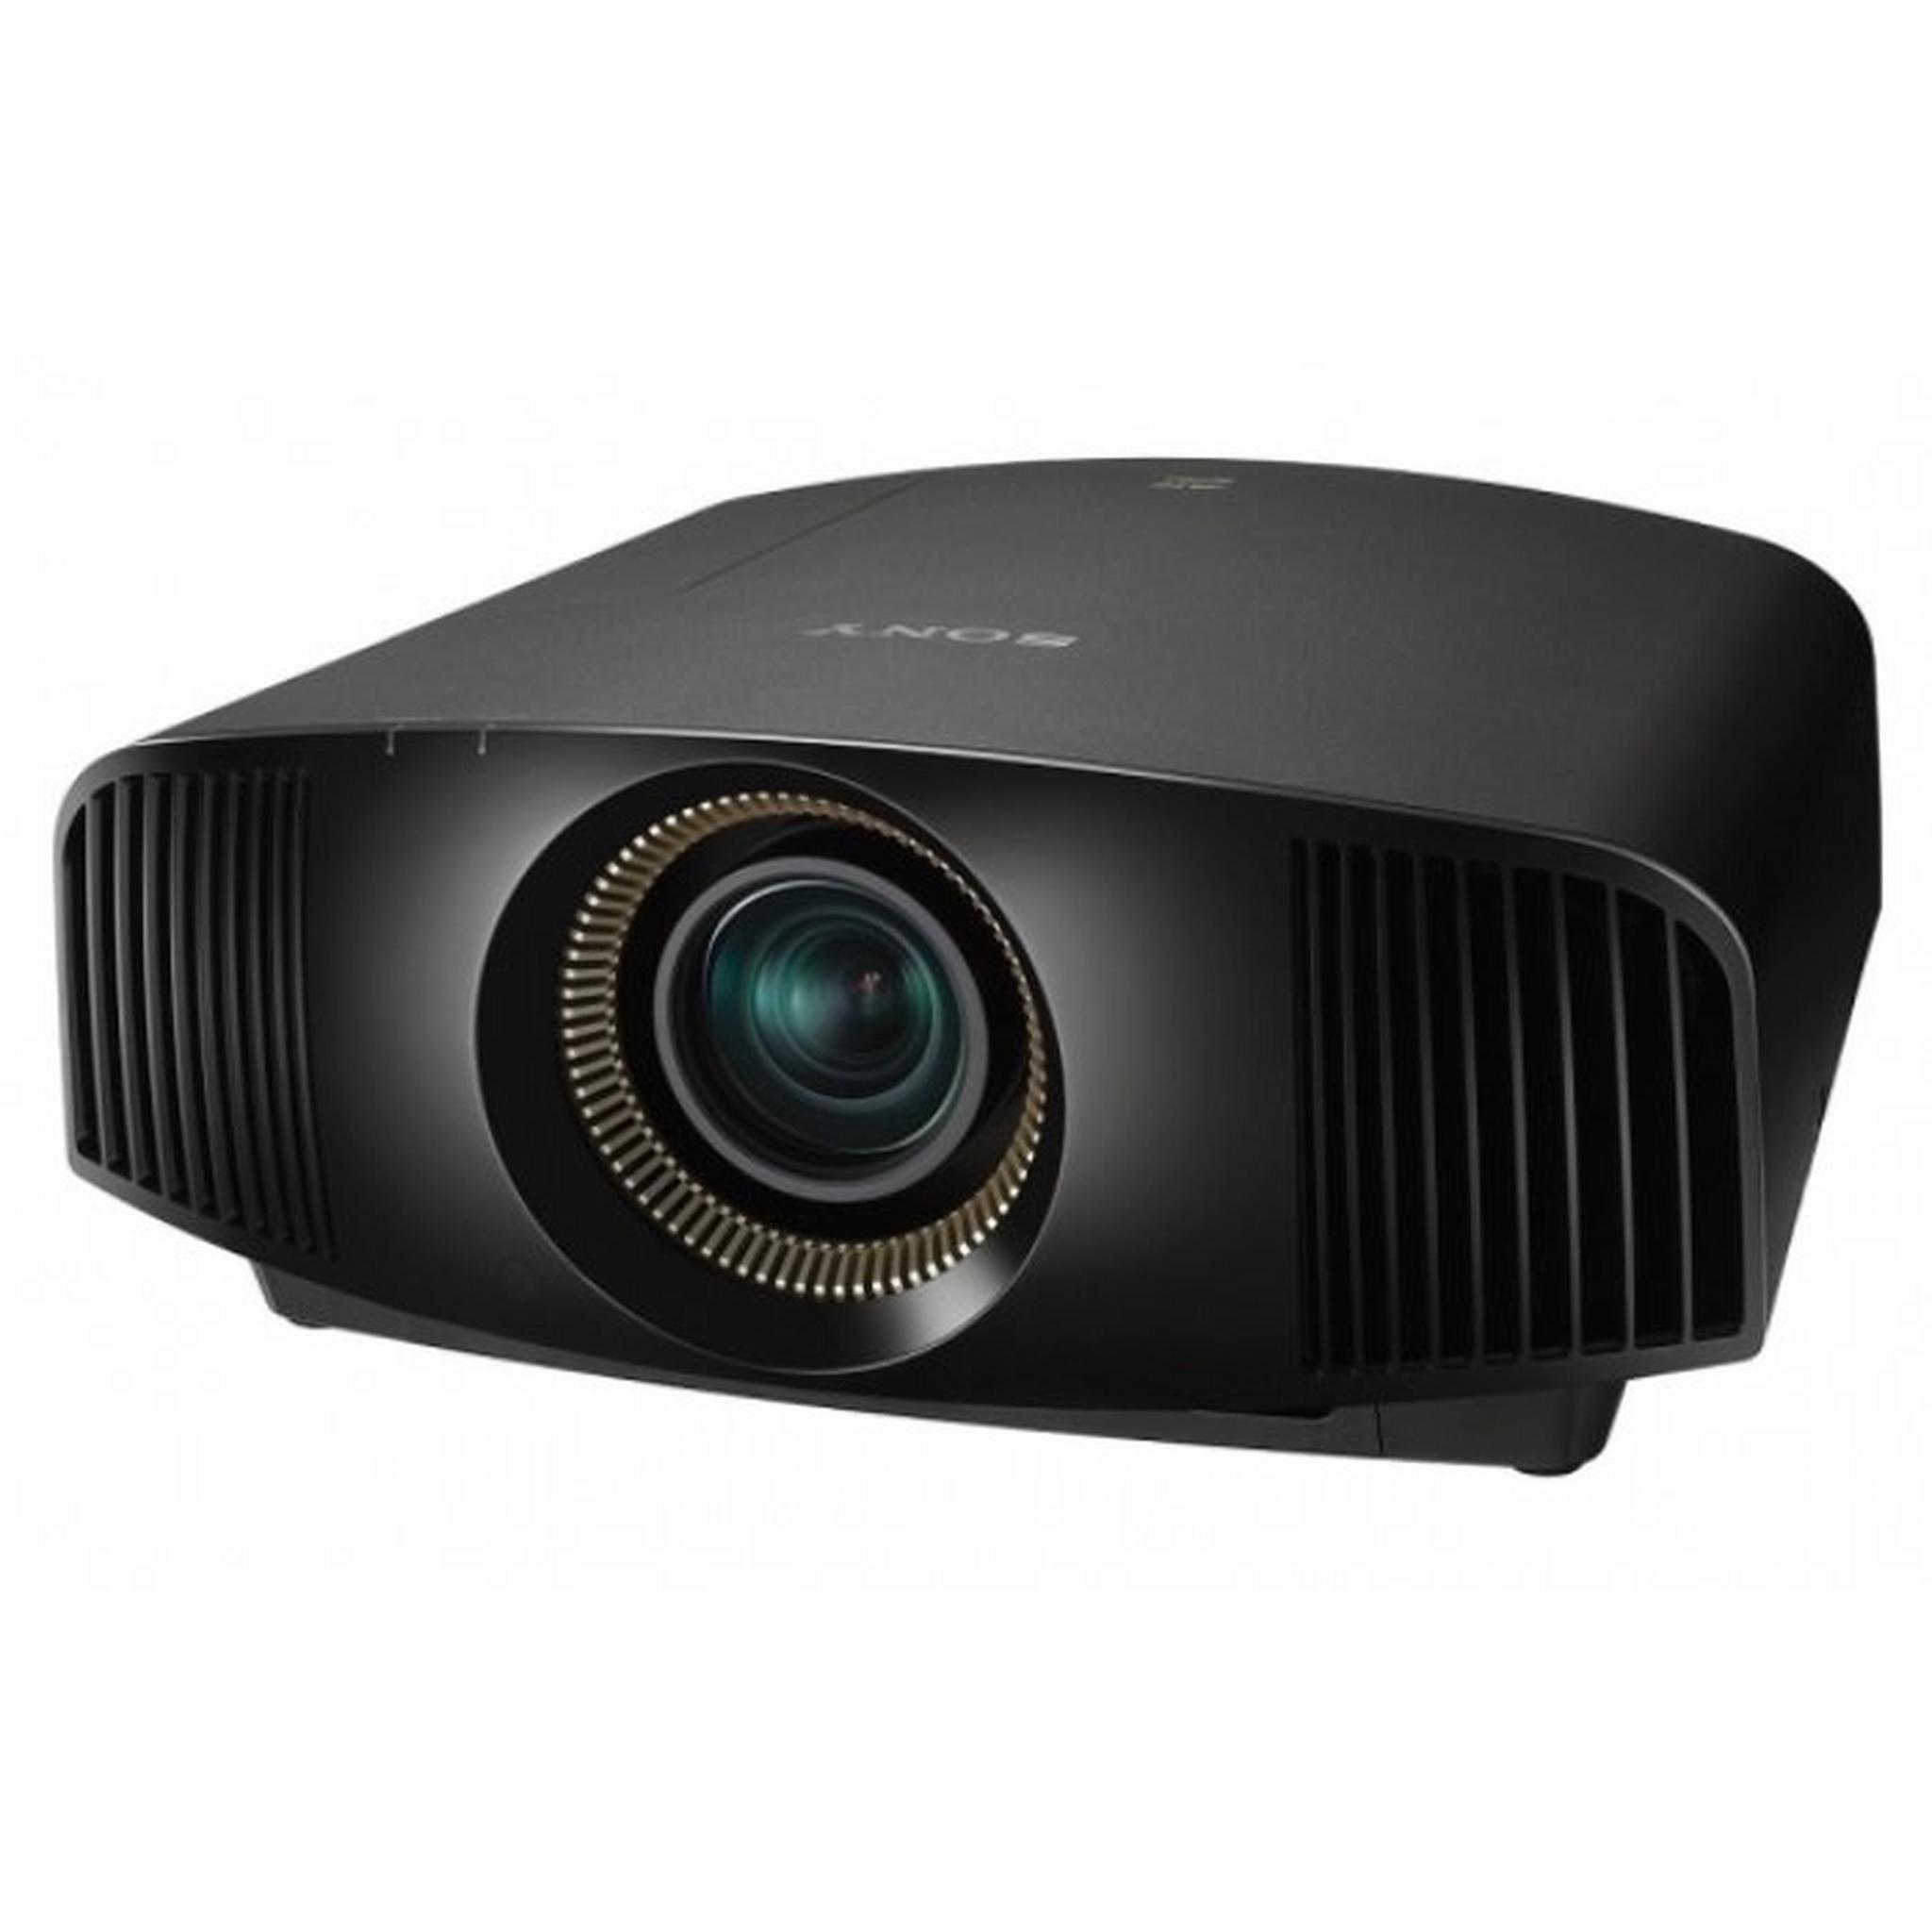 Sony 4K SXRD Home Cinema Projector (VPL-VW590ES) - Black